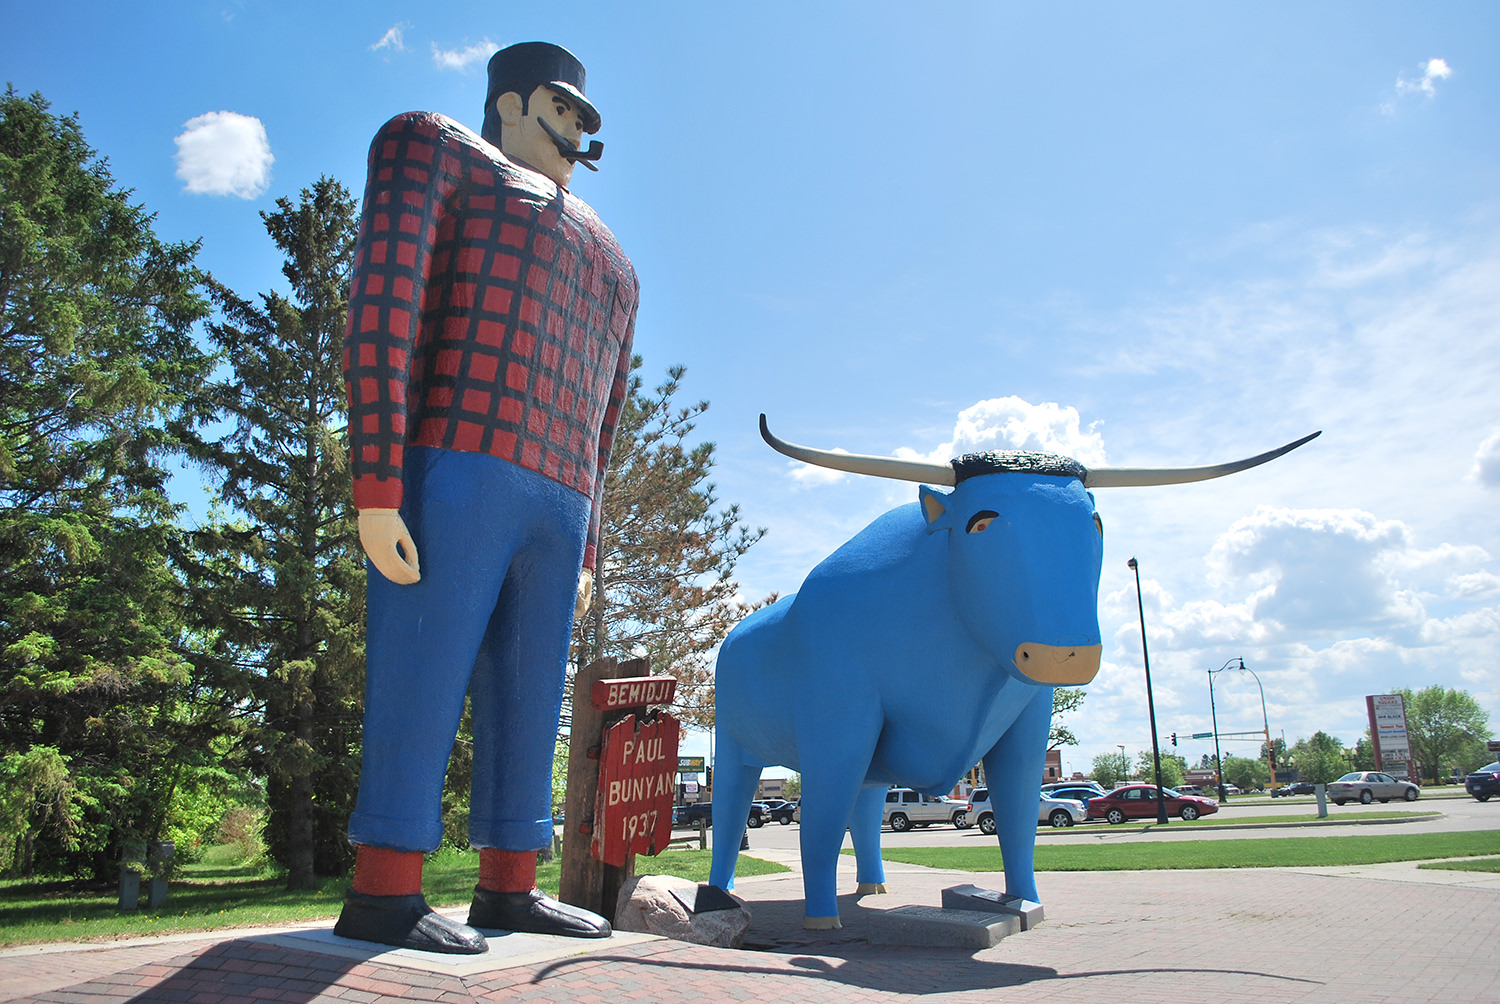 Paul Bunyan and Babe the Blue Ox in Bemidji, Minnesota, erected in 1936.